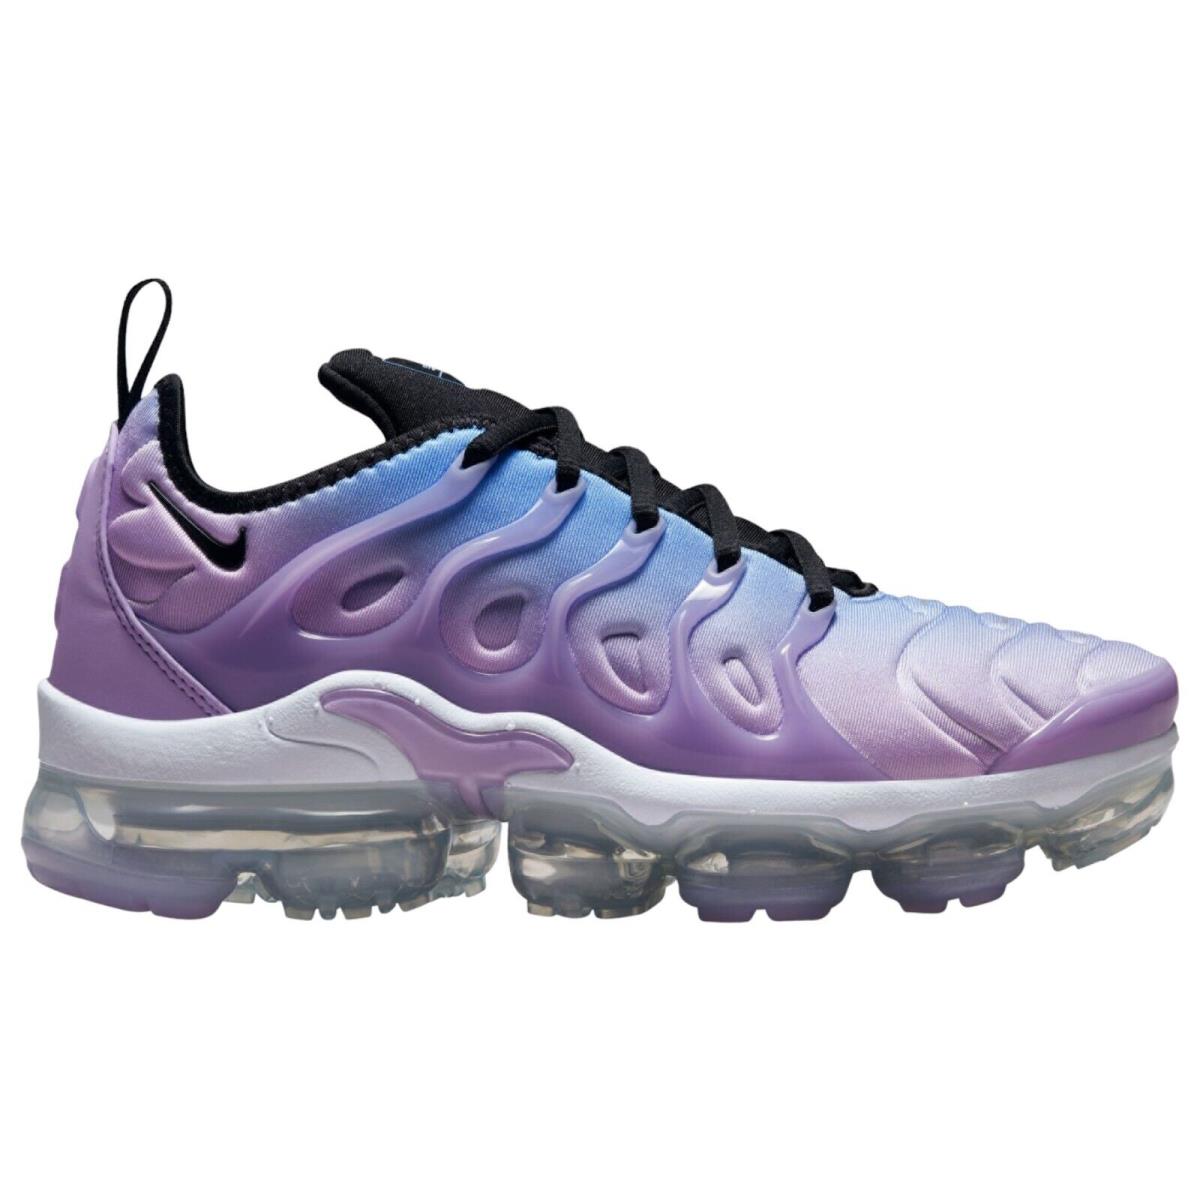 Nike Air Vapormax Plus Women`s Running Shoes All Colors US Sizes 6-11 Lilac/University Blue/Barely Grape/Black